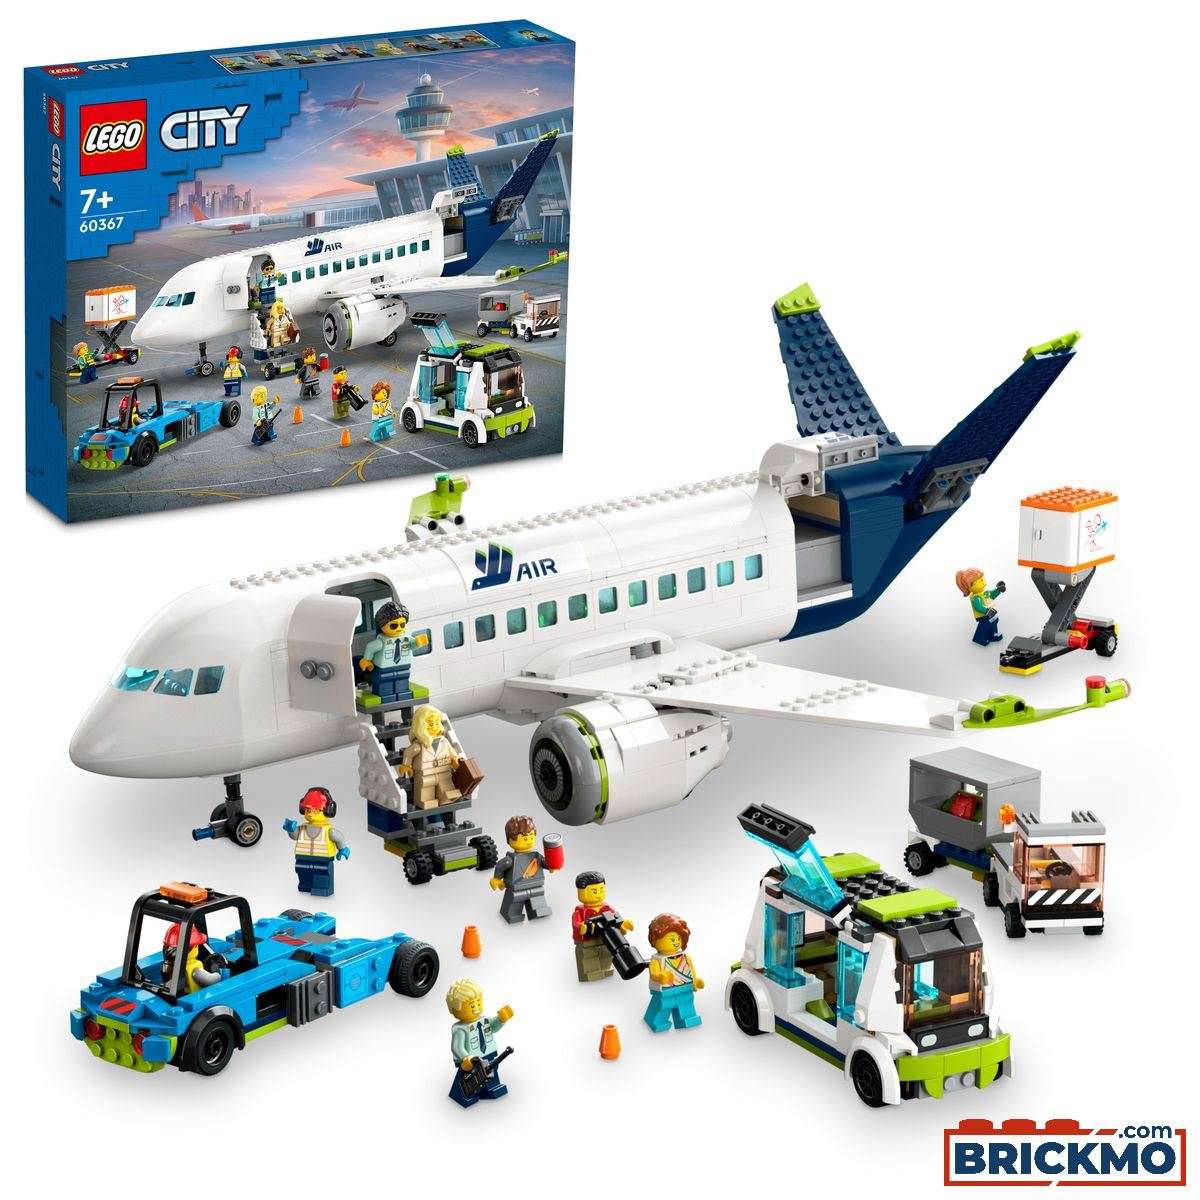 LEGO City 60367 Passenger Airplane 60367